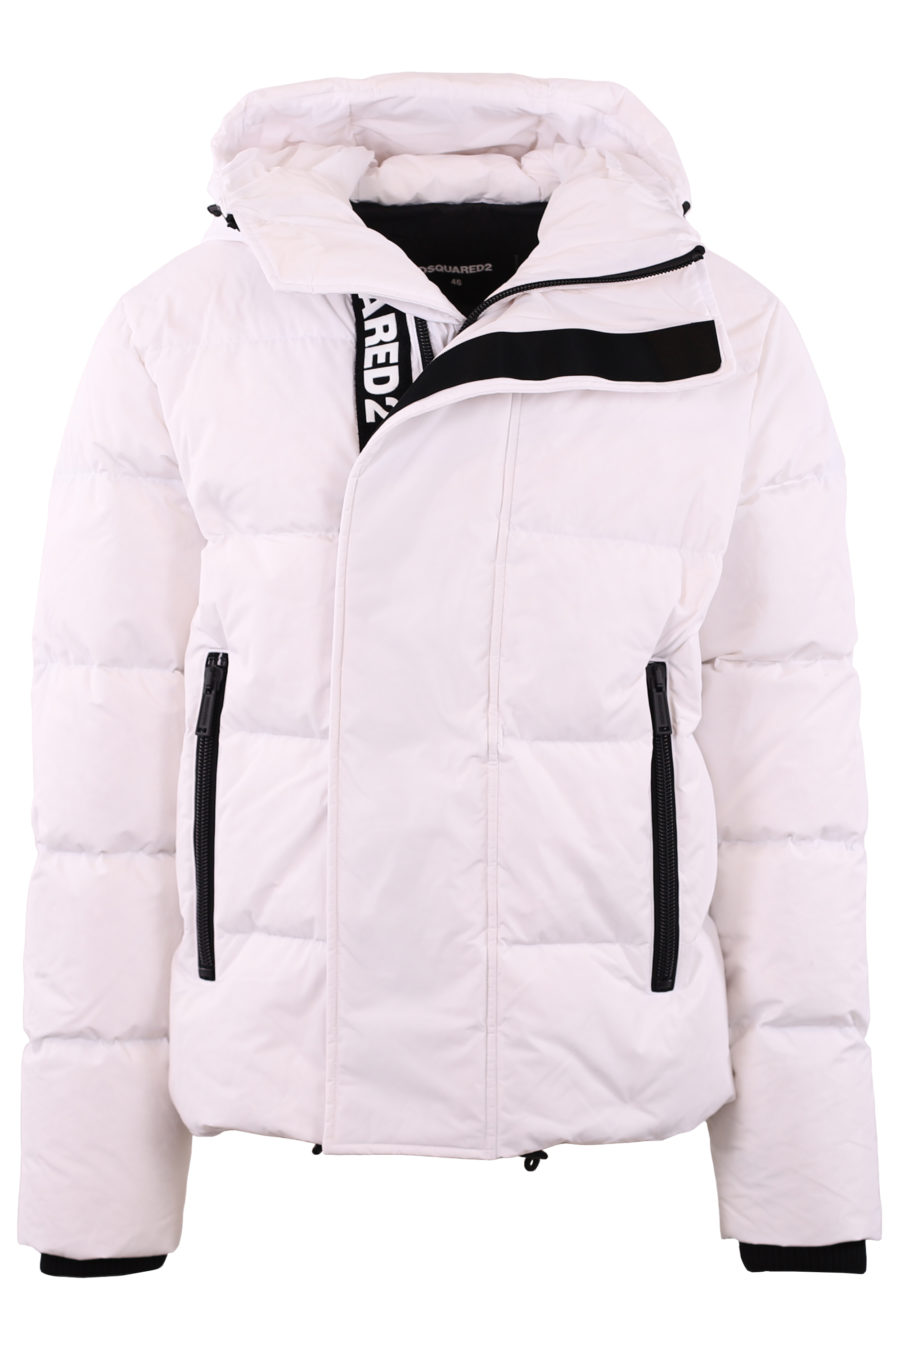 White jacket with logo on the zip - IMG 7243